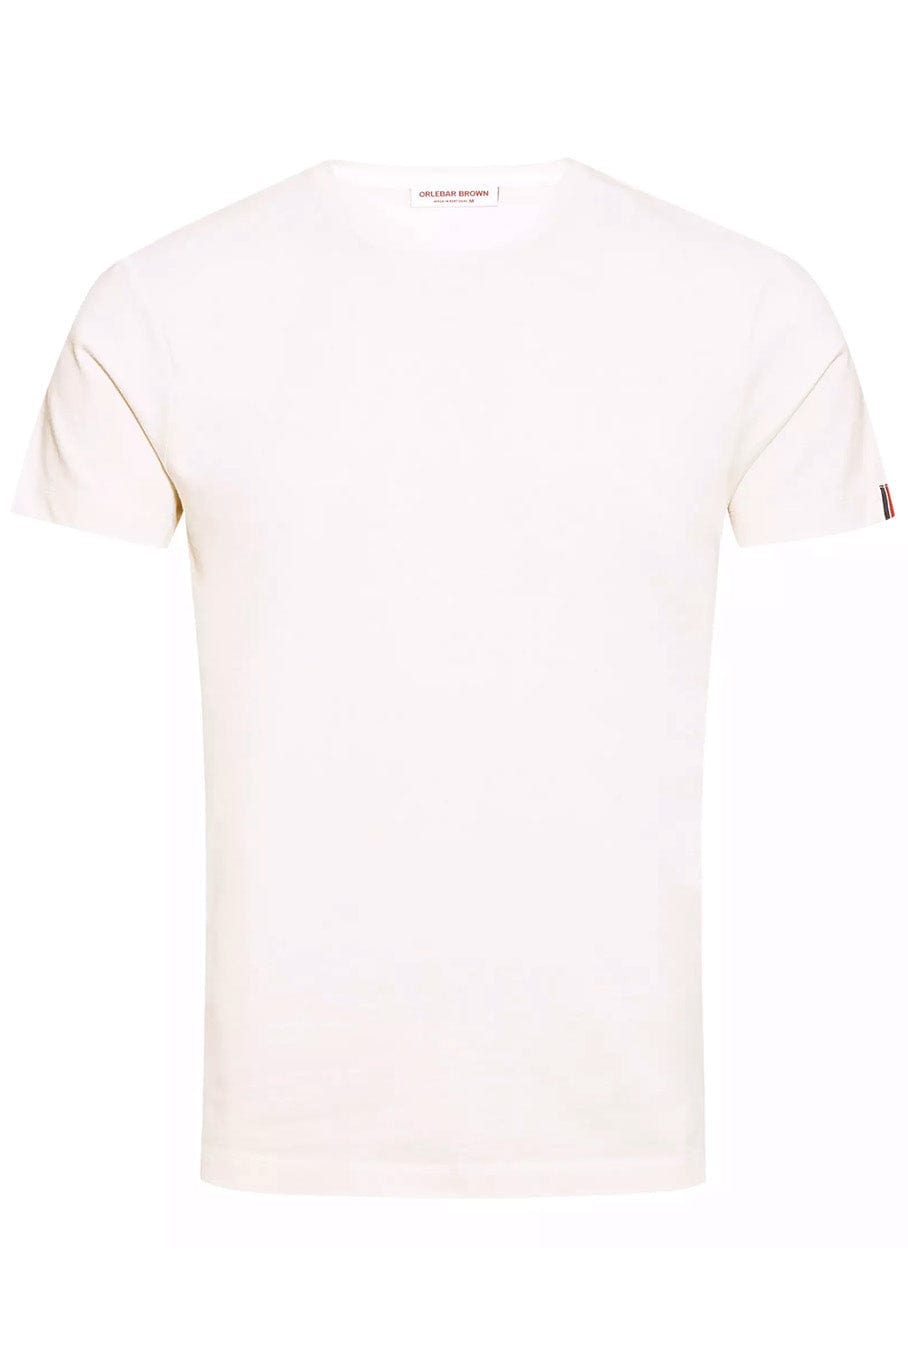 Sammy Gt T-Shirt - White Sand MENSCLOTHINGTEE ORLEBAR BROWN   